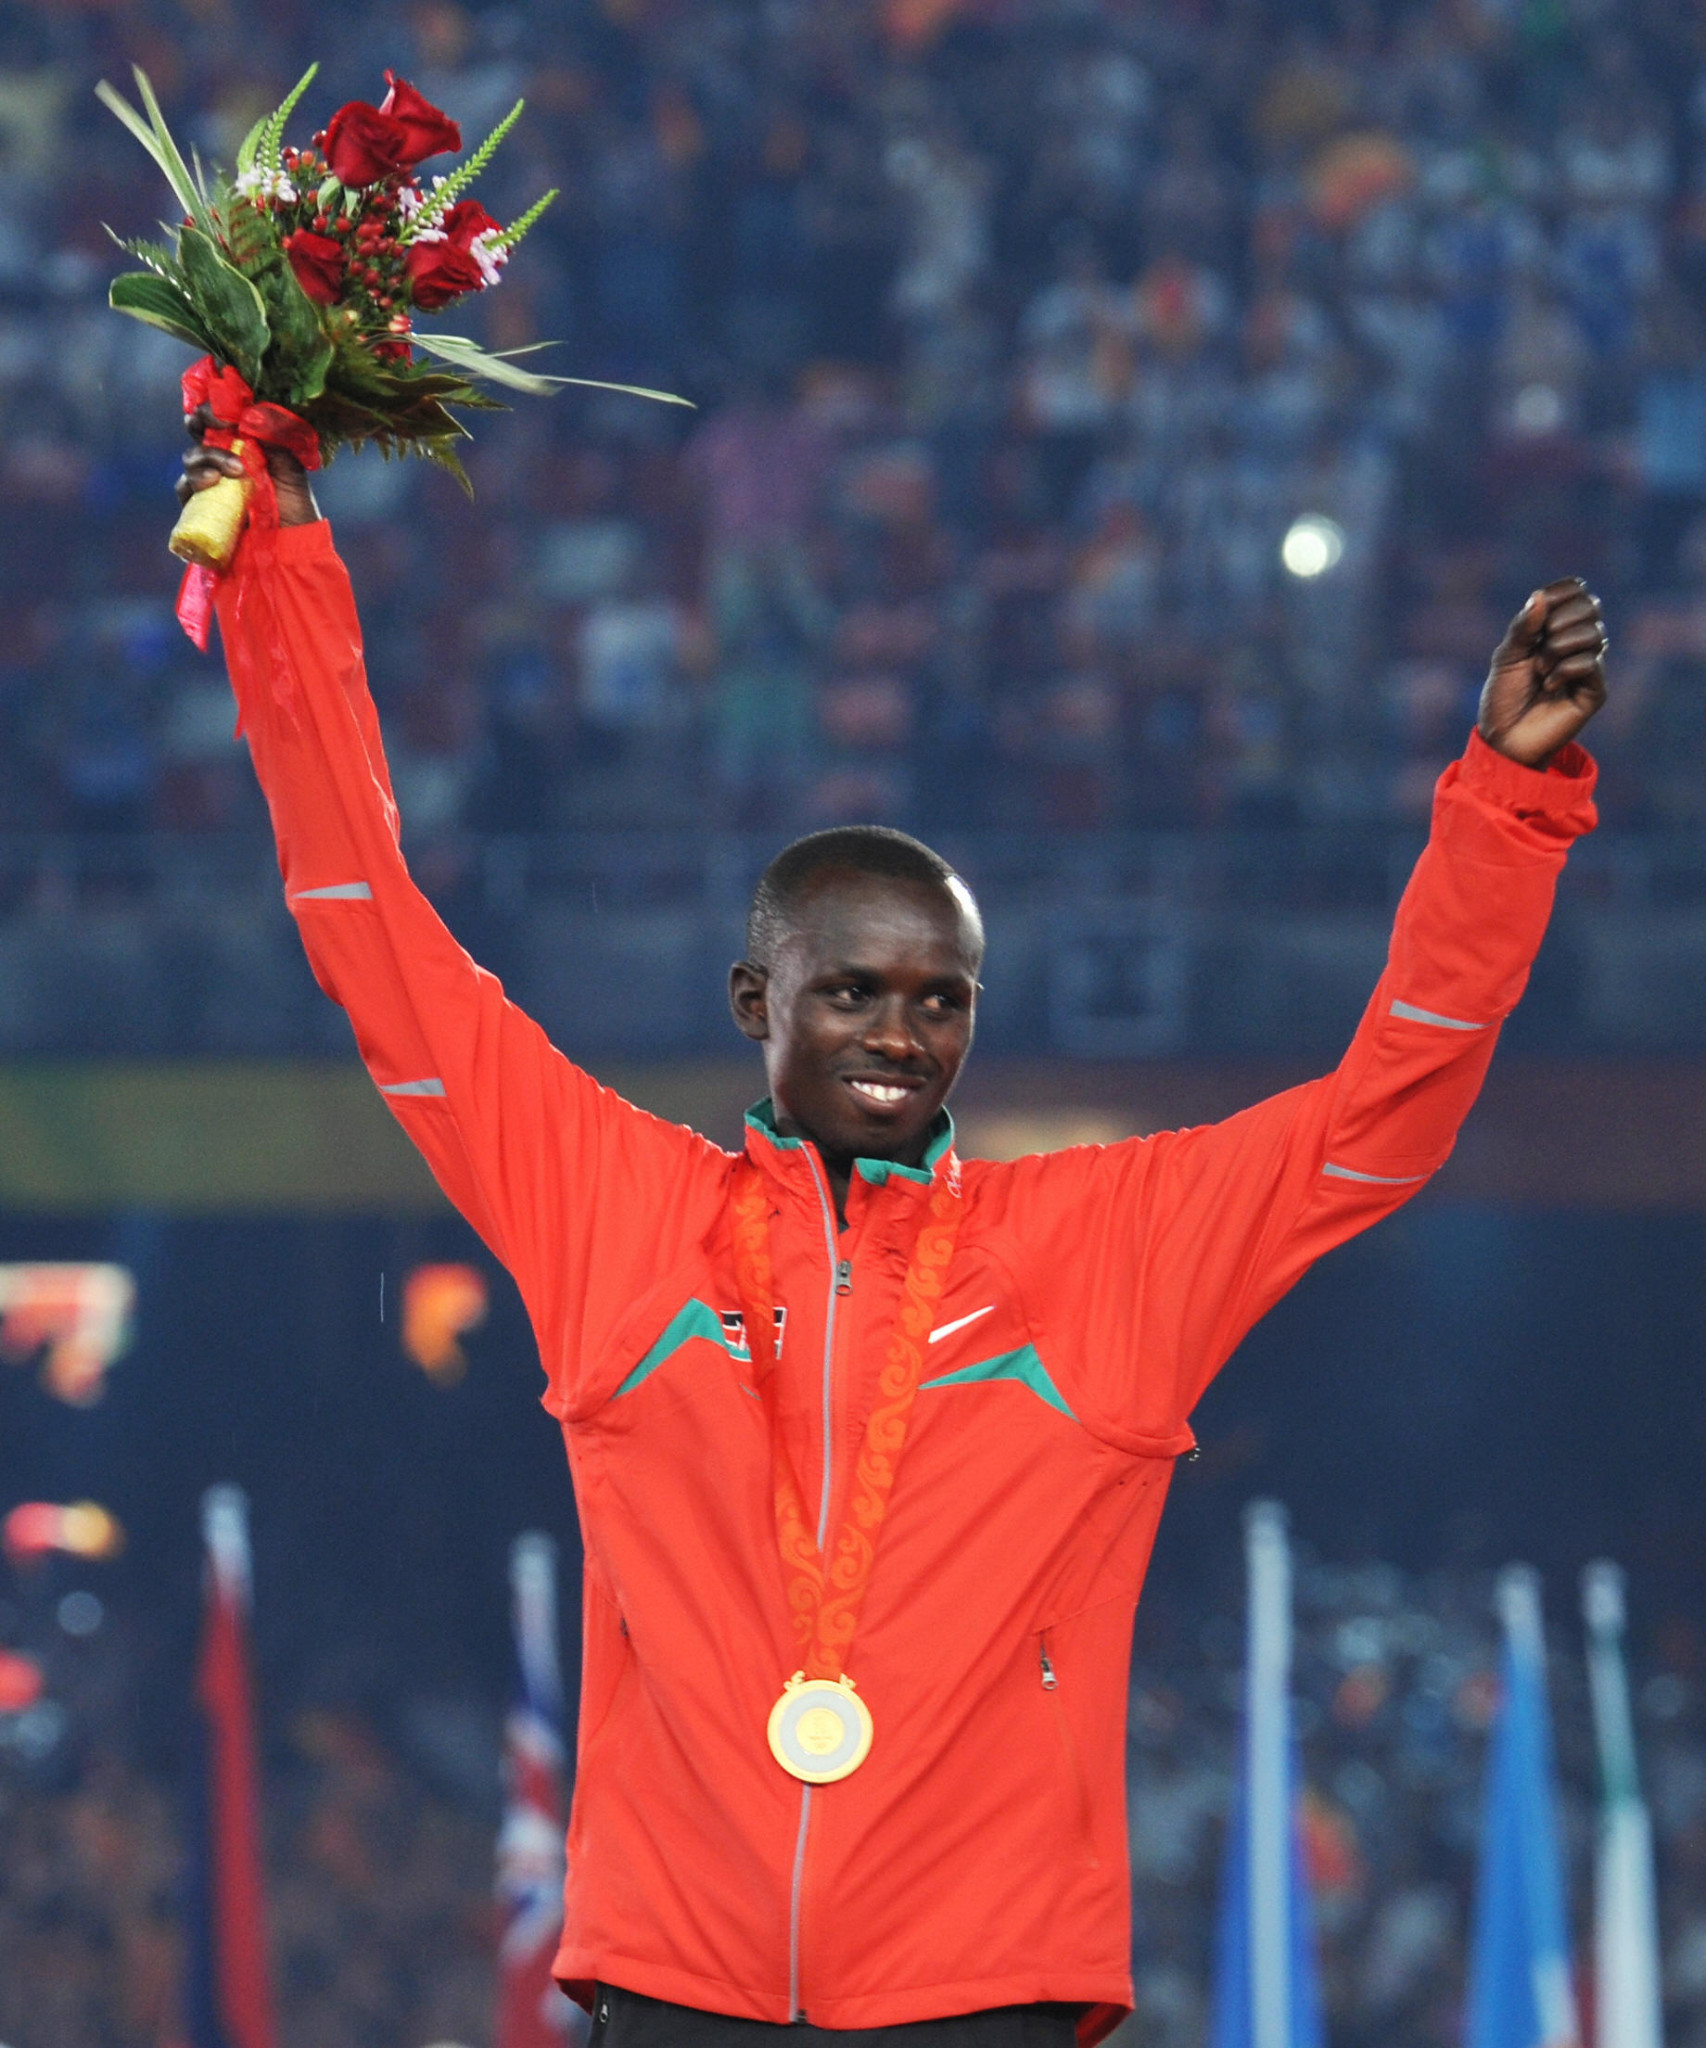 Race in memory of Olympic marathon champion Wanjiru stopped by police in Kenya